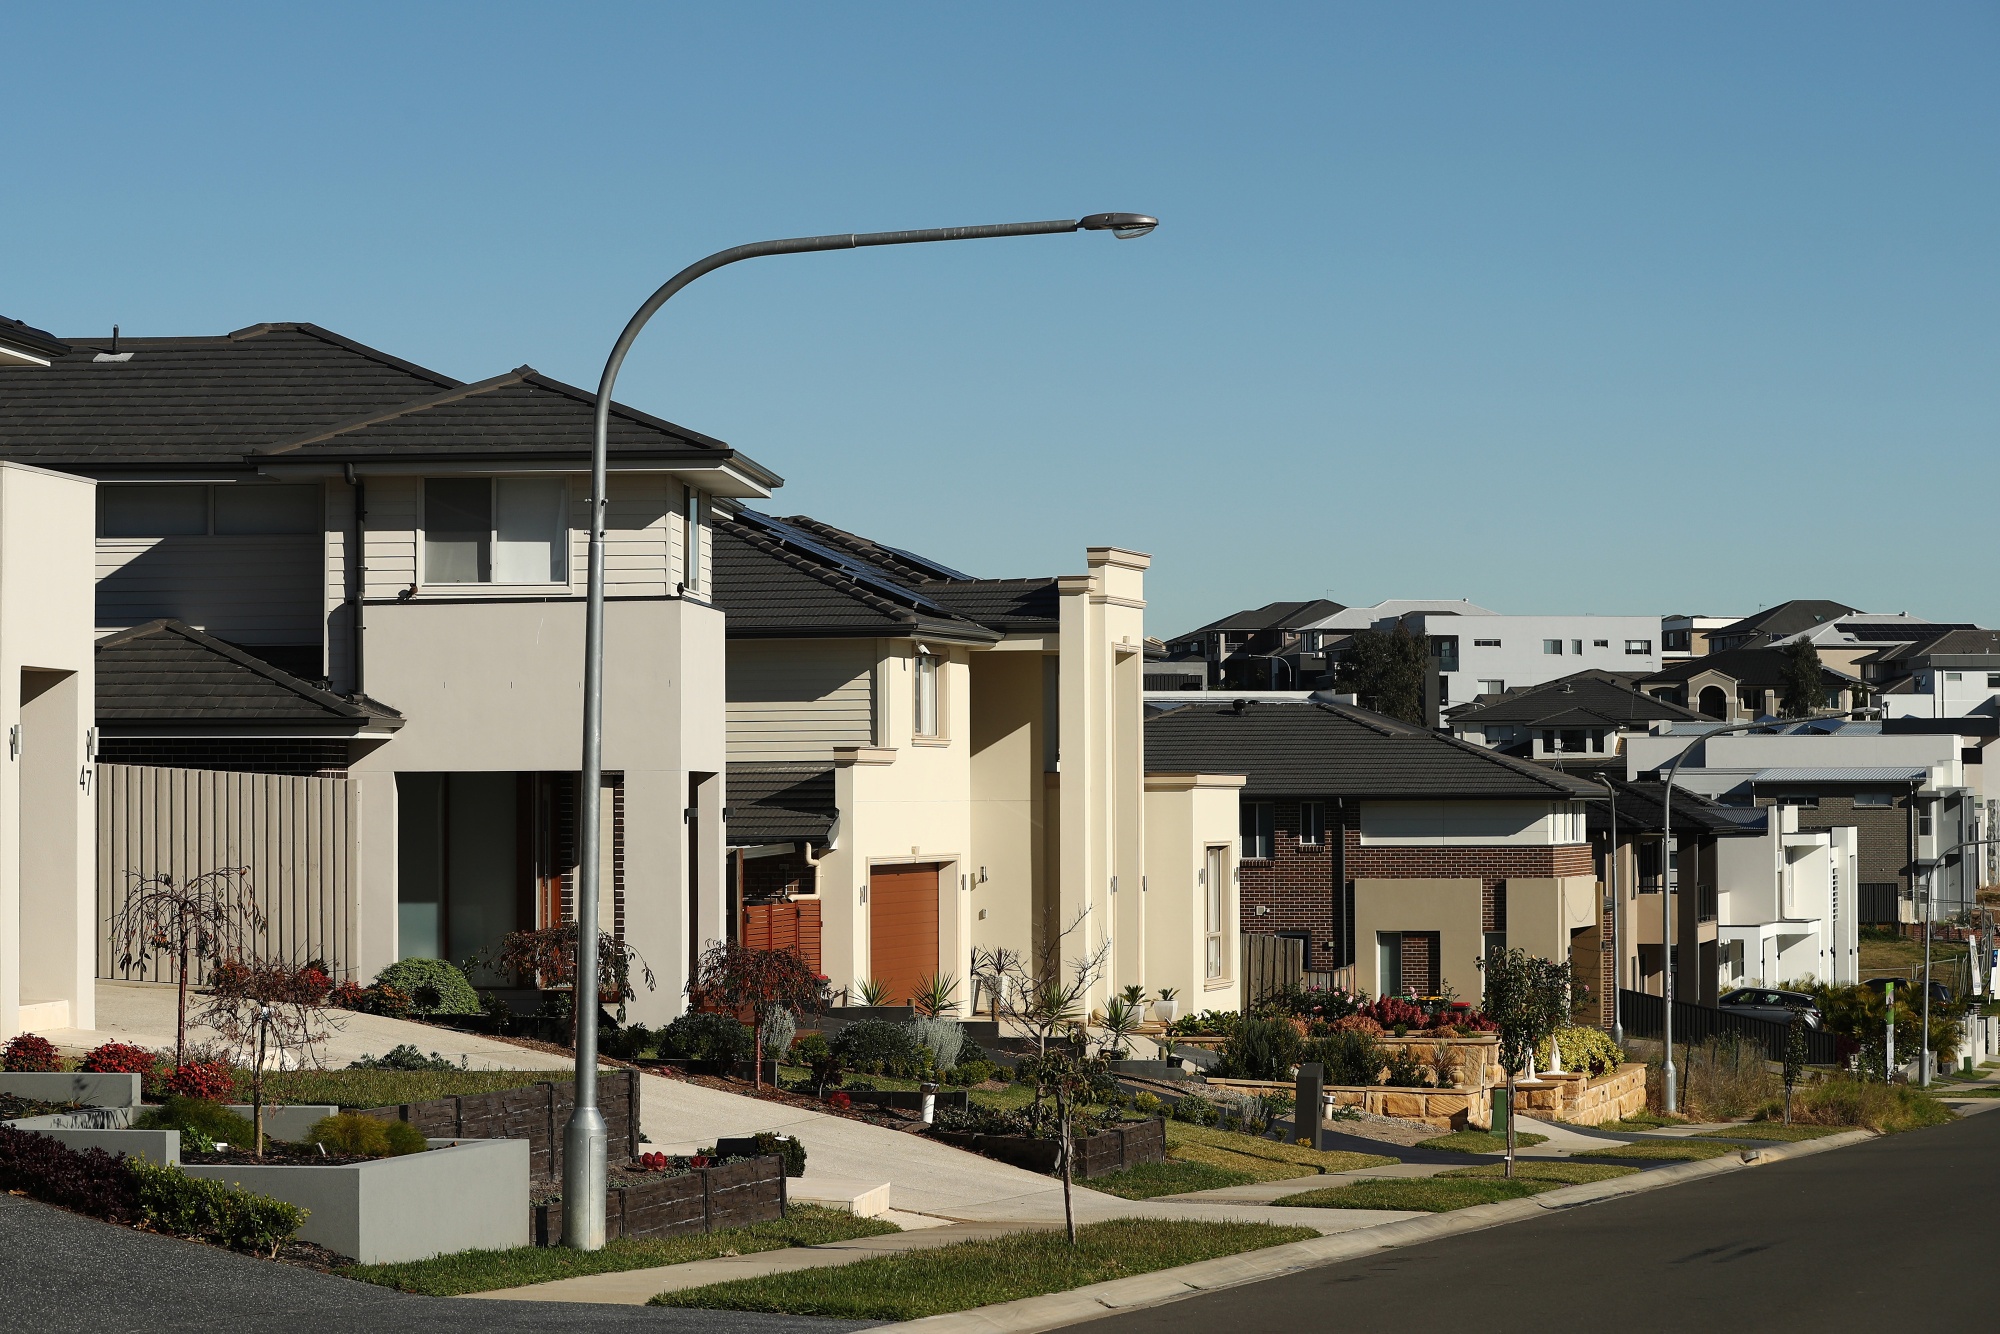 Homes stand in the Bella Vista suburb of Sydney, Australia, on&nbsp;June 3.&nbsp;